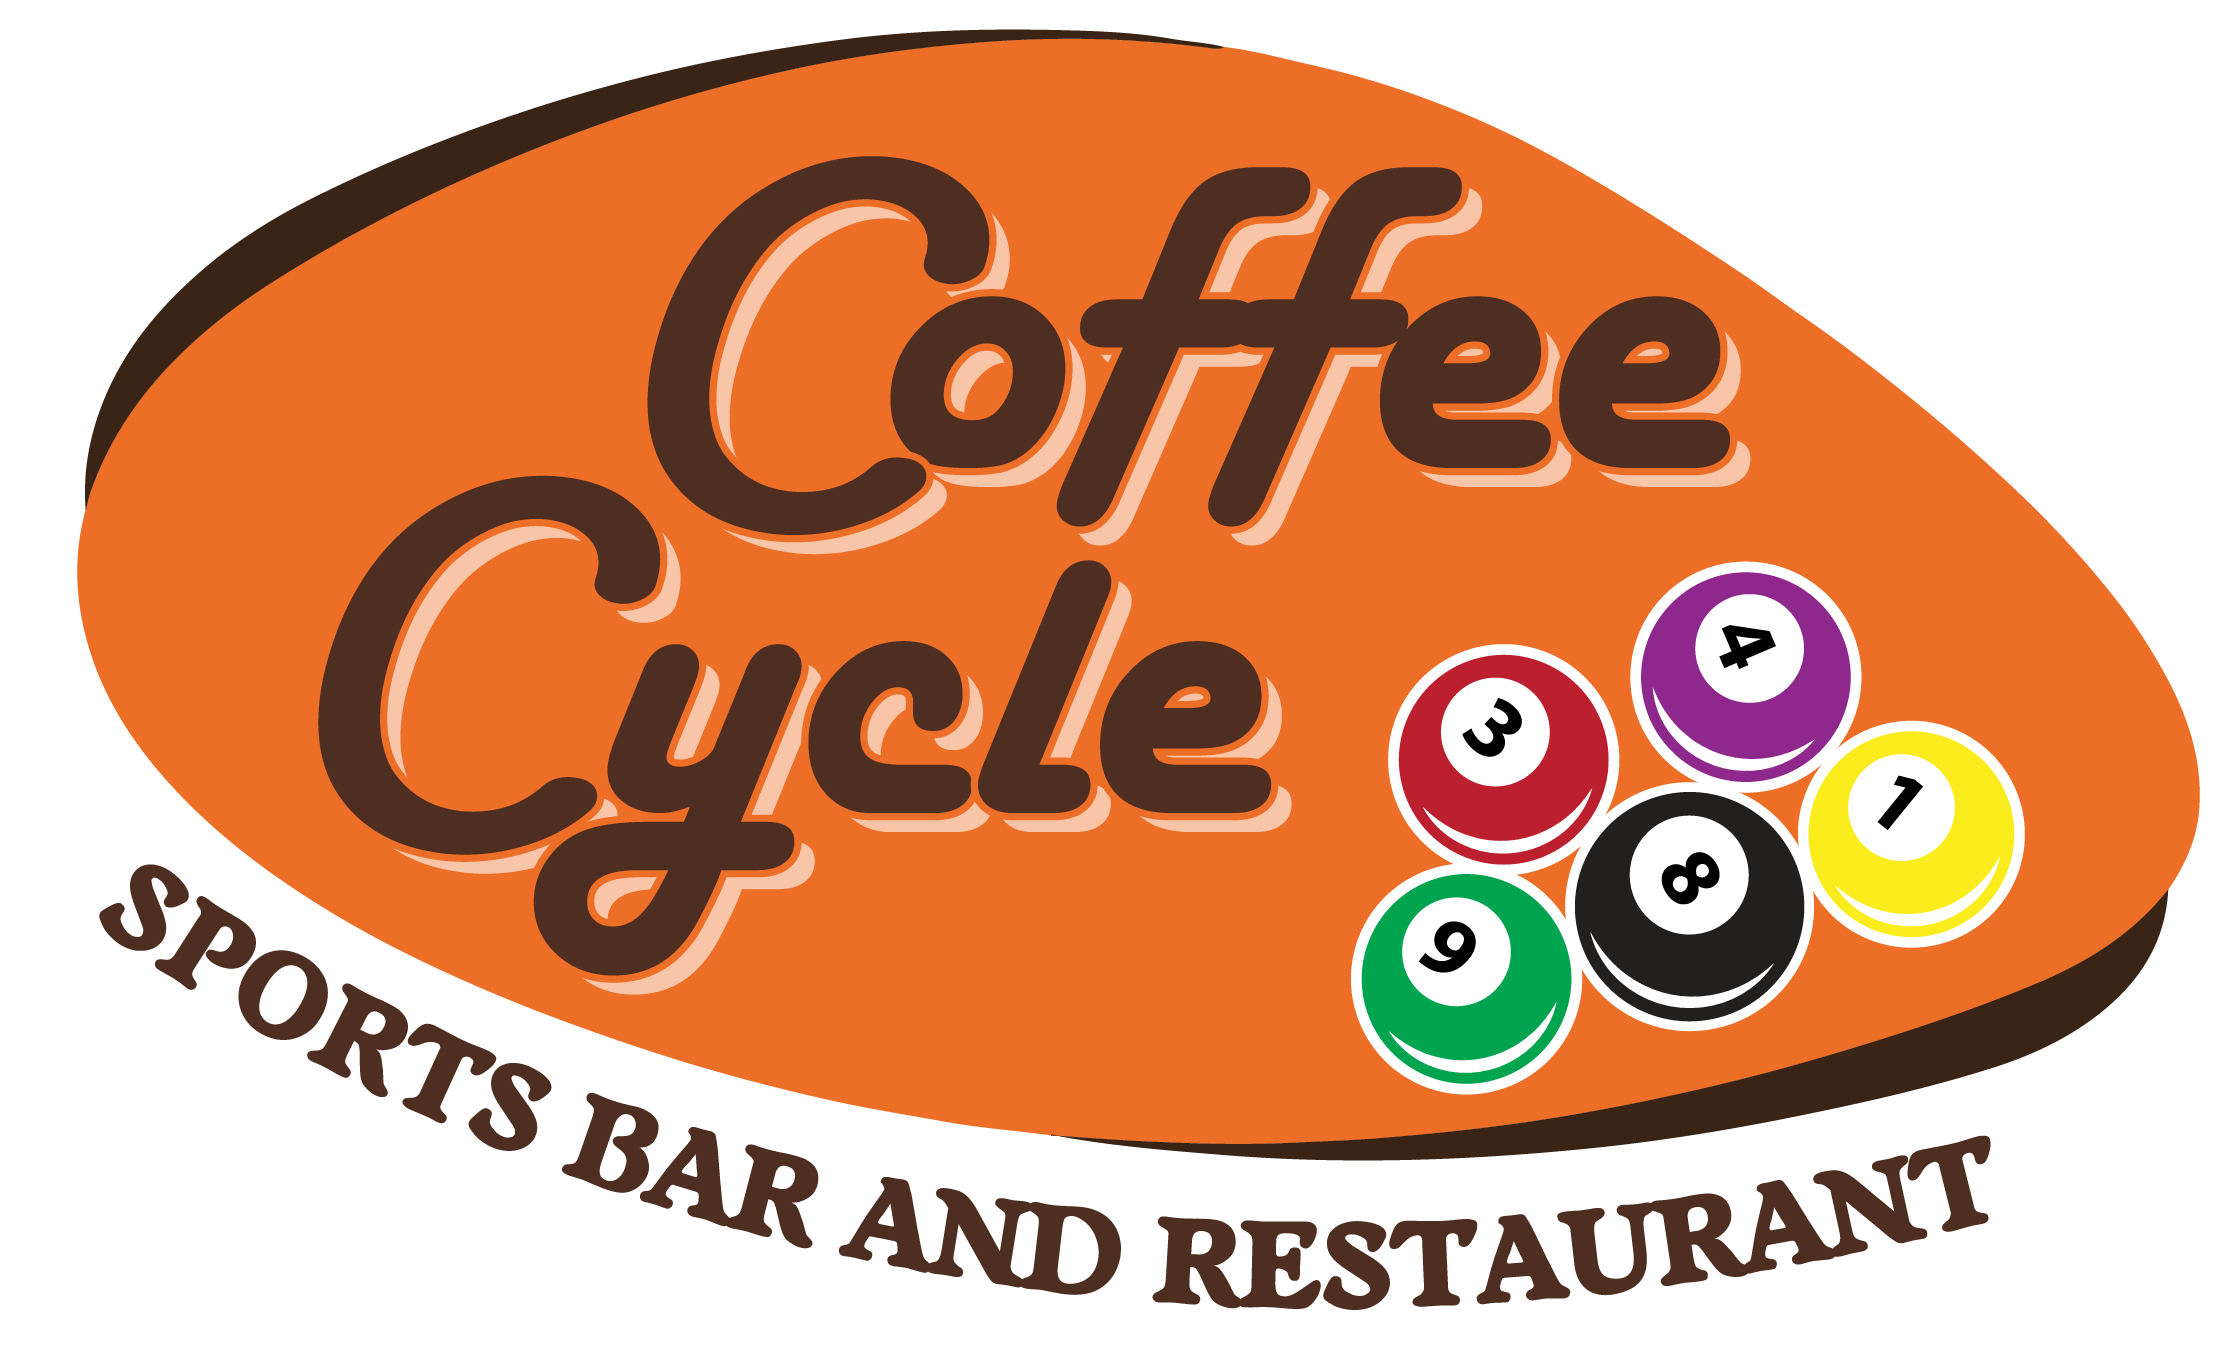 CoffeeCycle Sportsbar & Restaurant Chalong Phuket Thailand